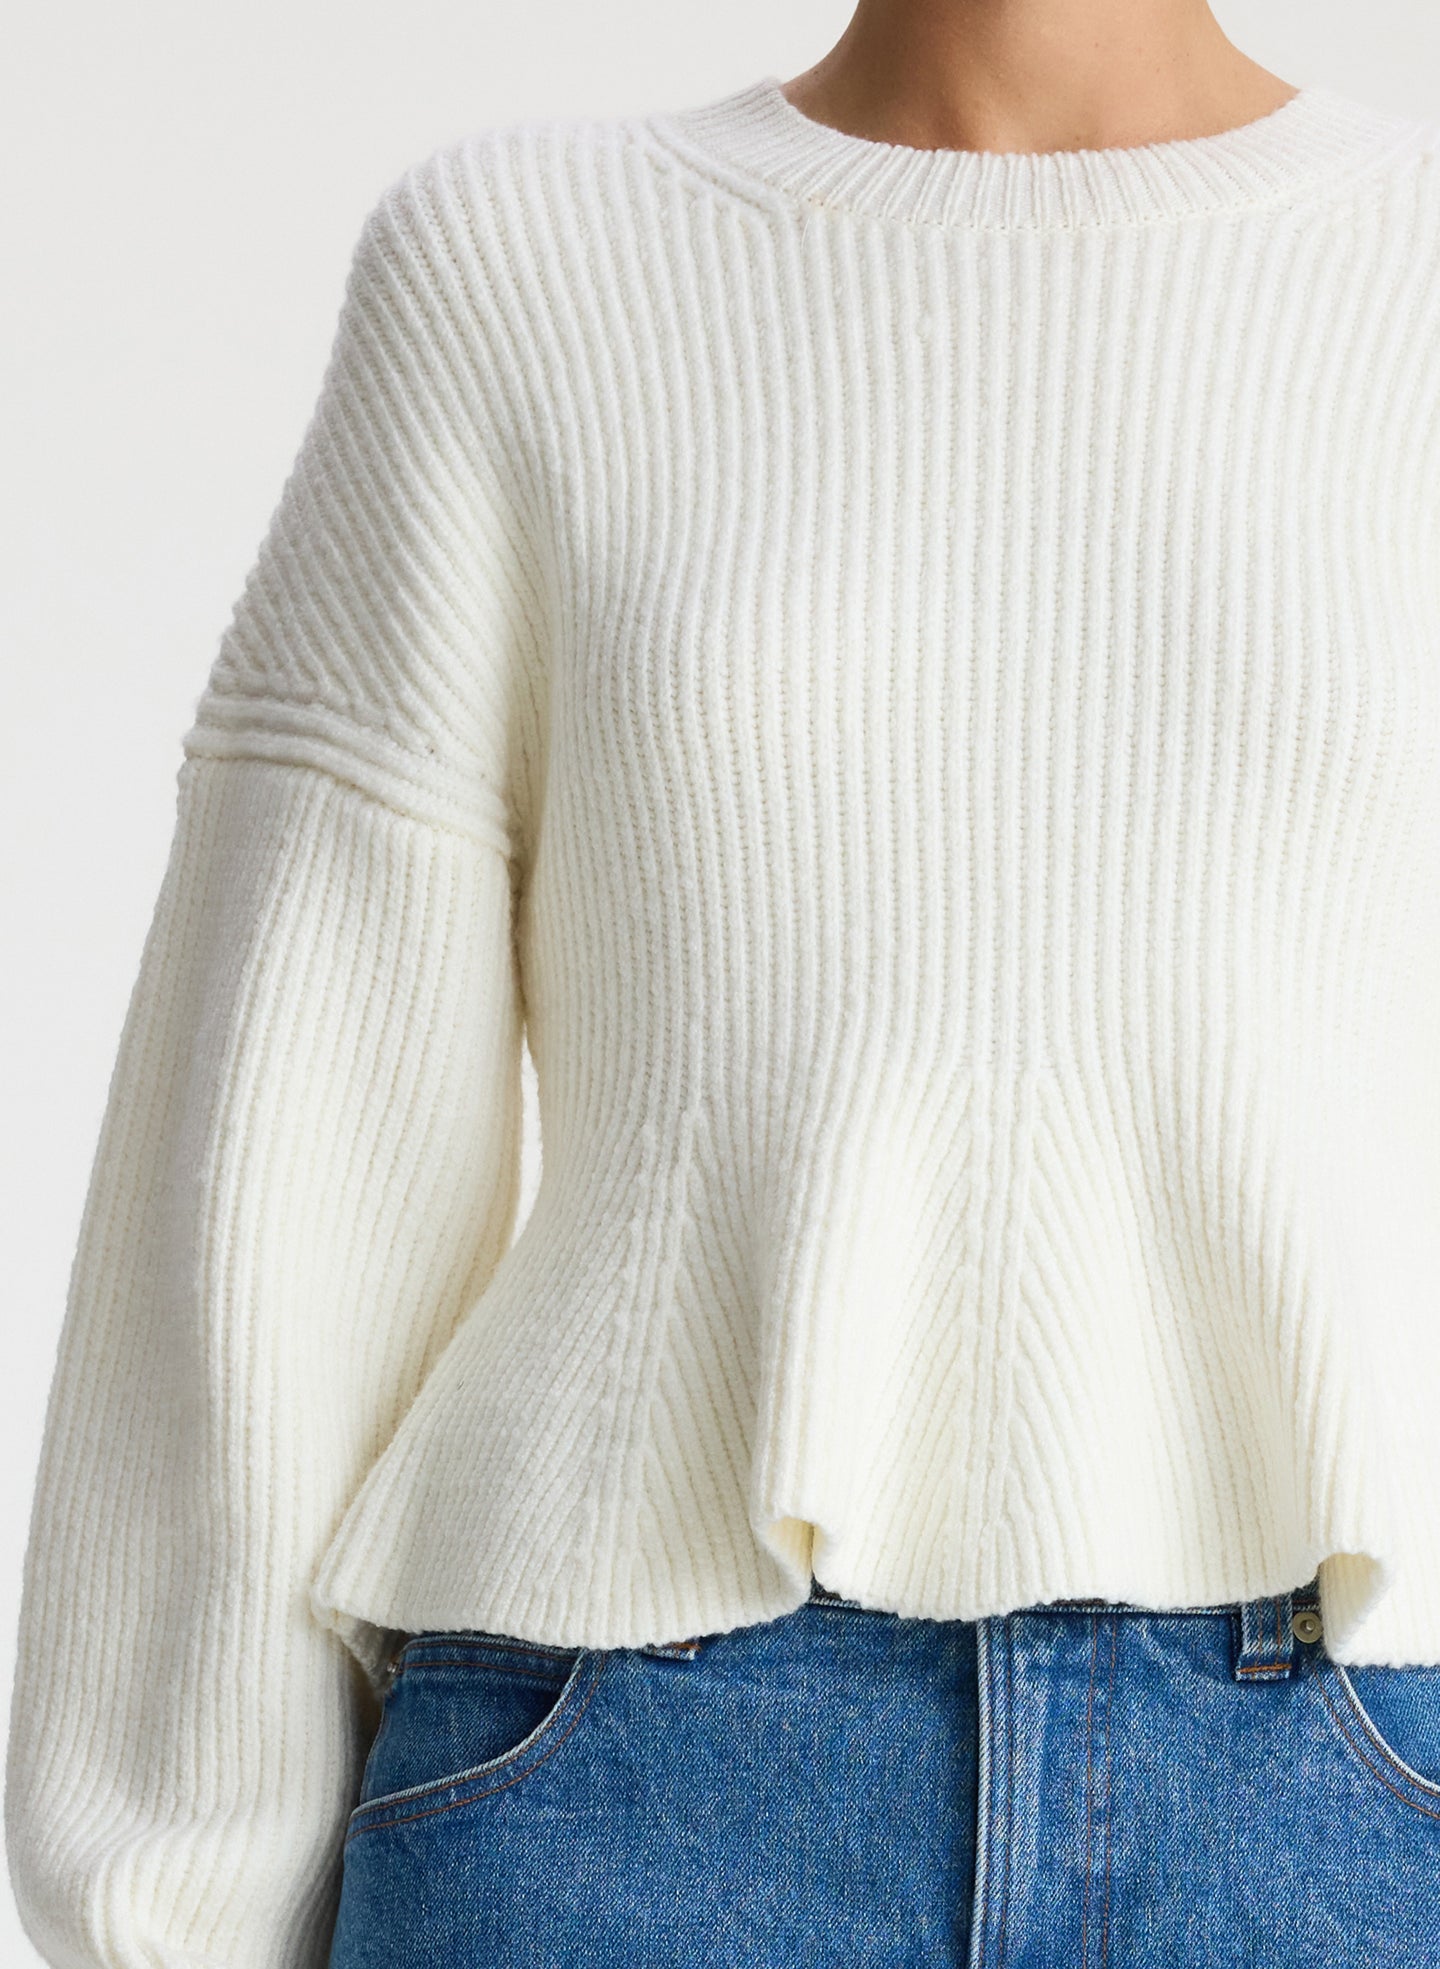 detail view of woman wearing white peplum sweater and medium blue wash denim jeans